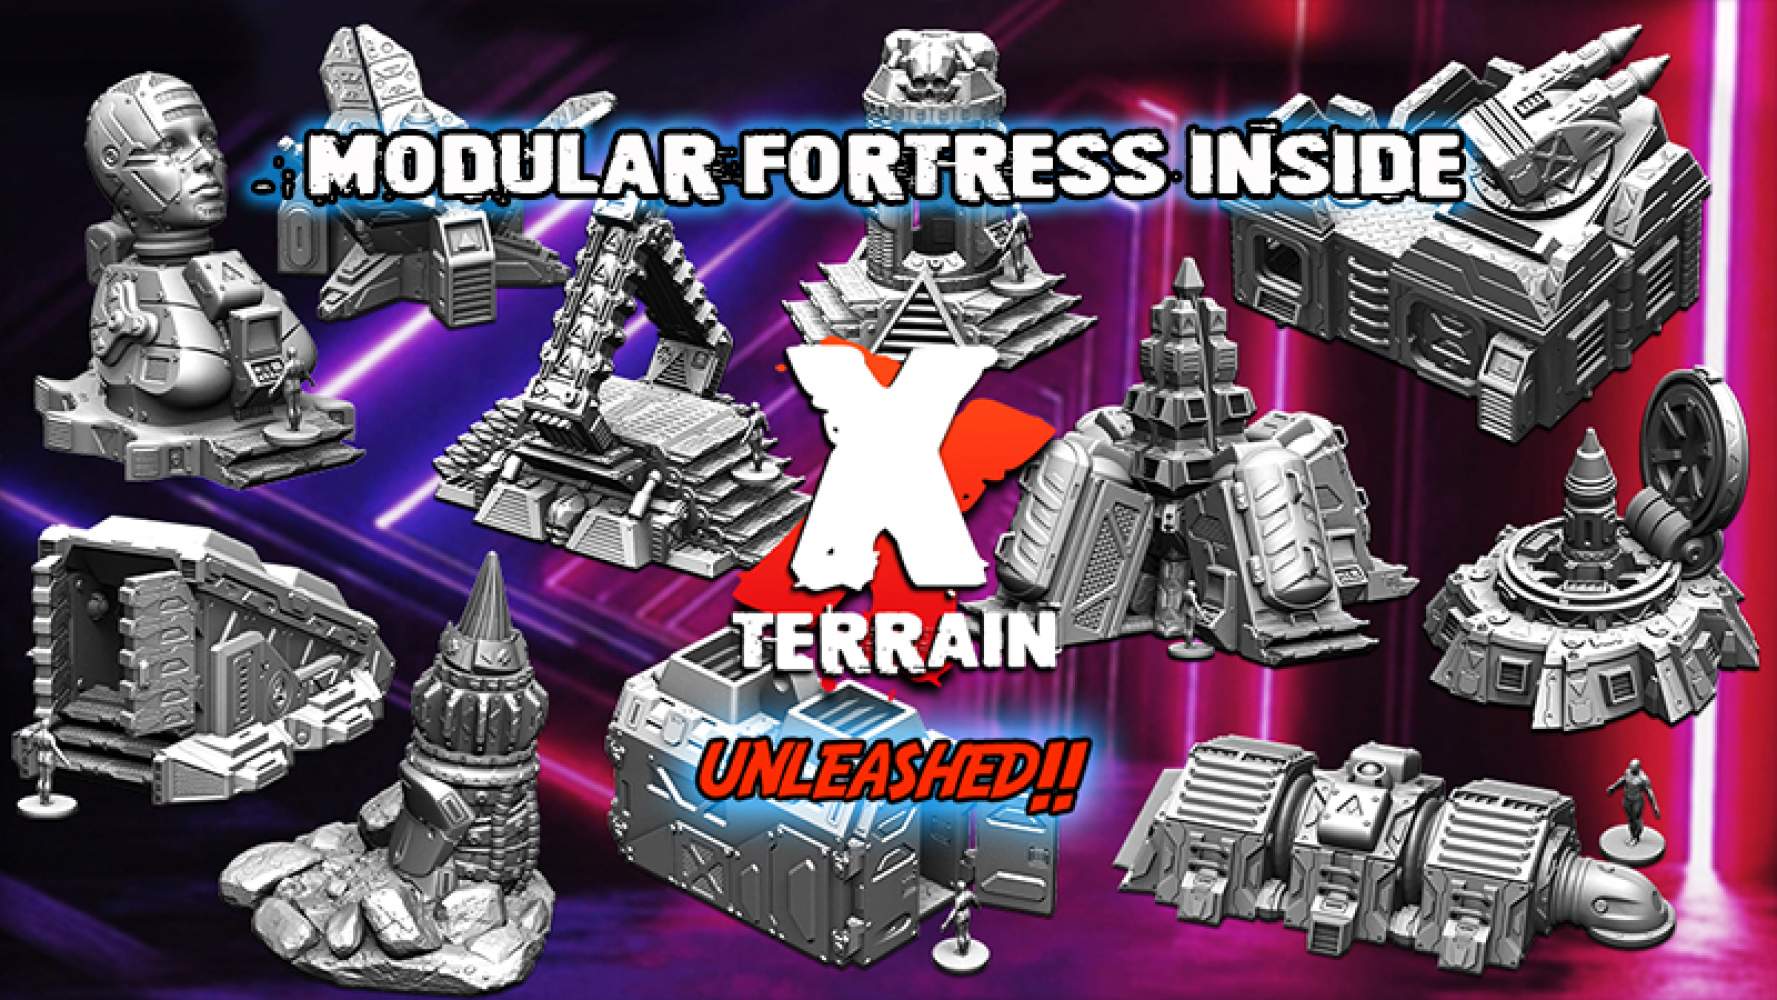 X-TERRAIN "Unleashed"